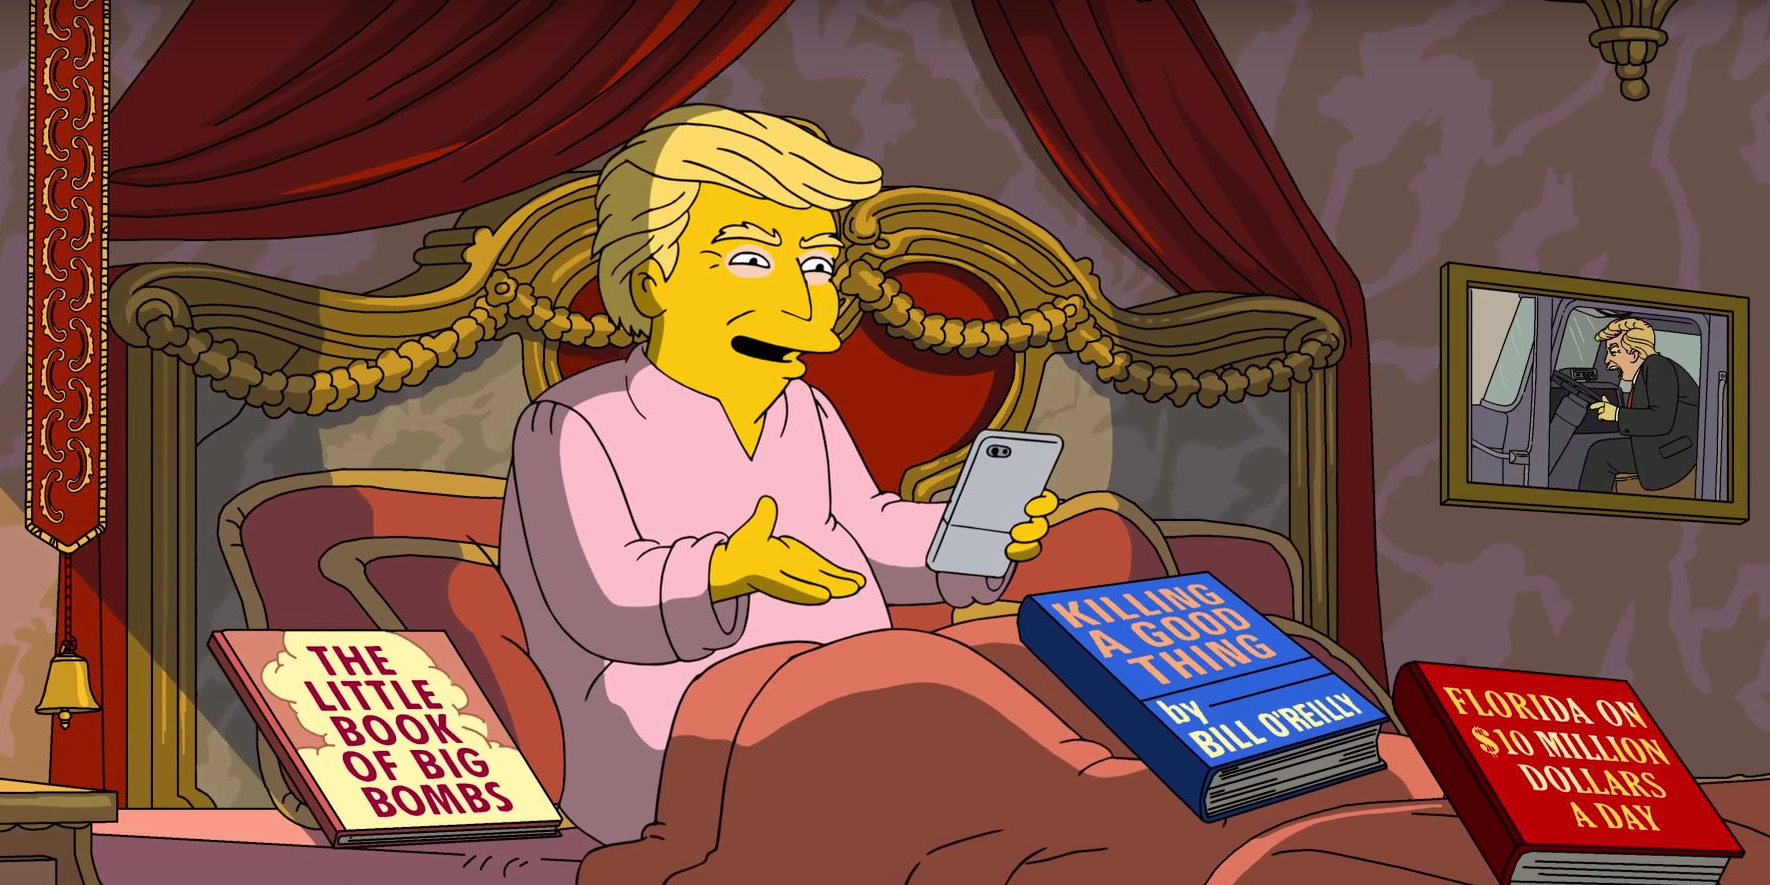 Trump Simpsons